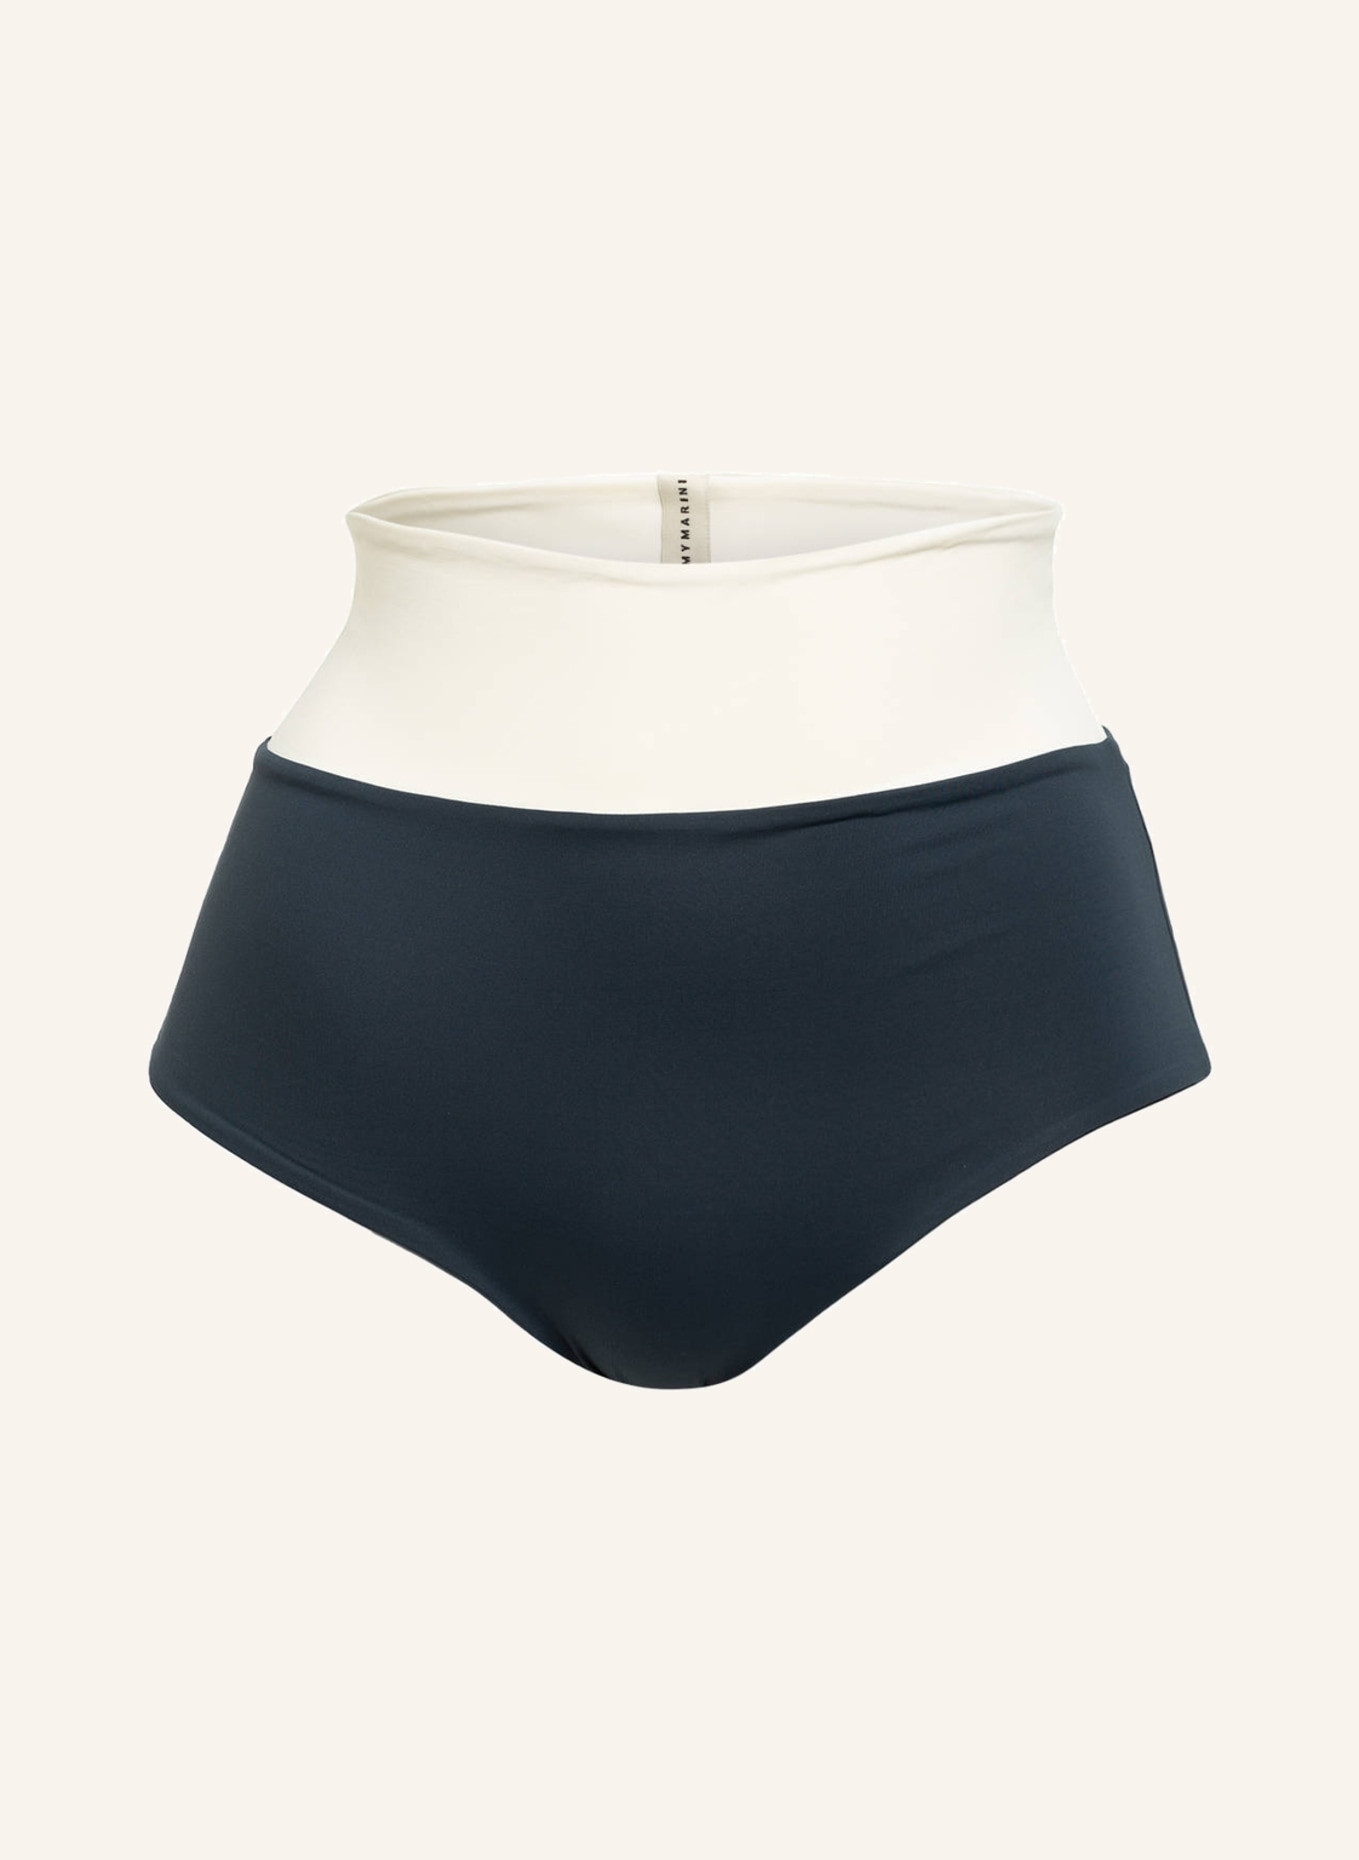 MYMARINI High-waist bikini bottoms SURFSHORTS reversible with UV protection 50+, Color: BLACK/ DARK GRAY/ CREAM (Image 1)